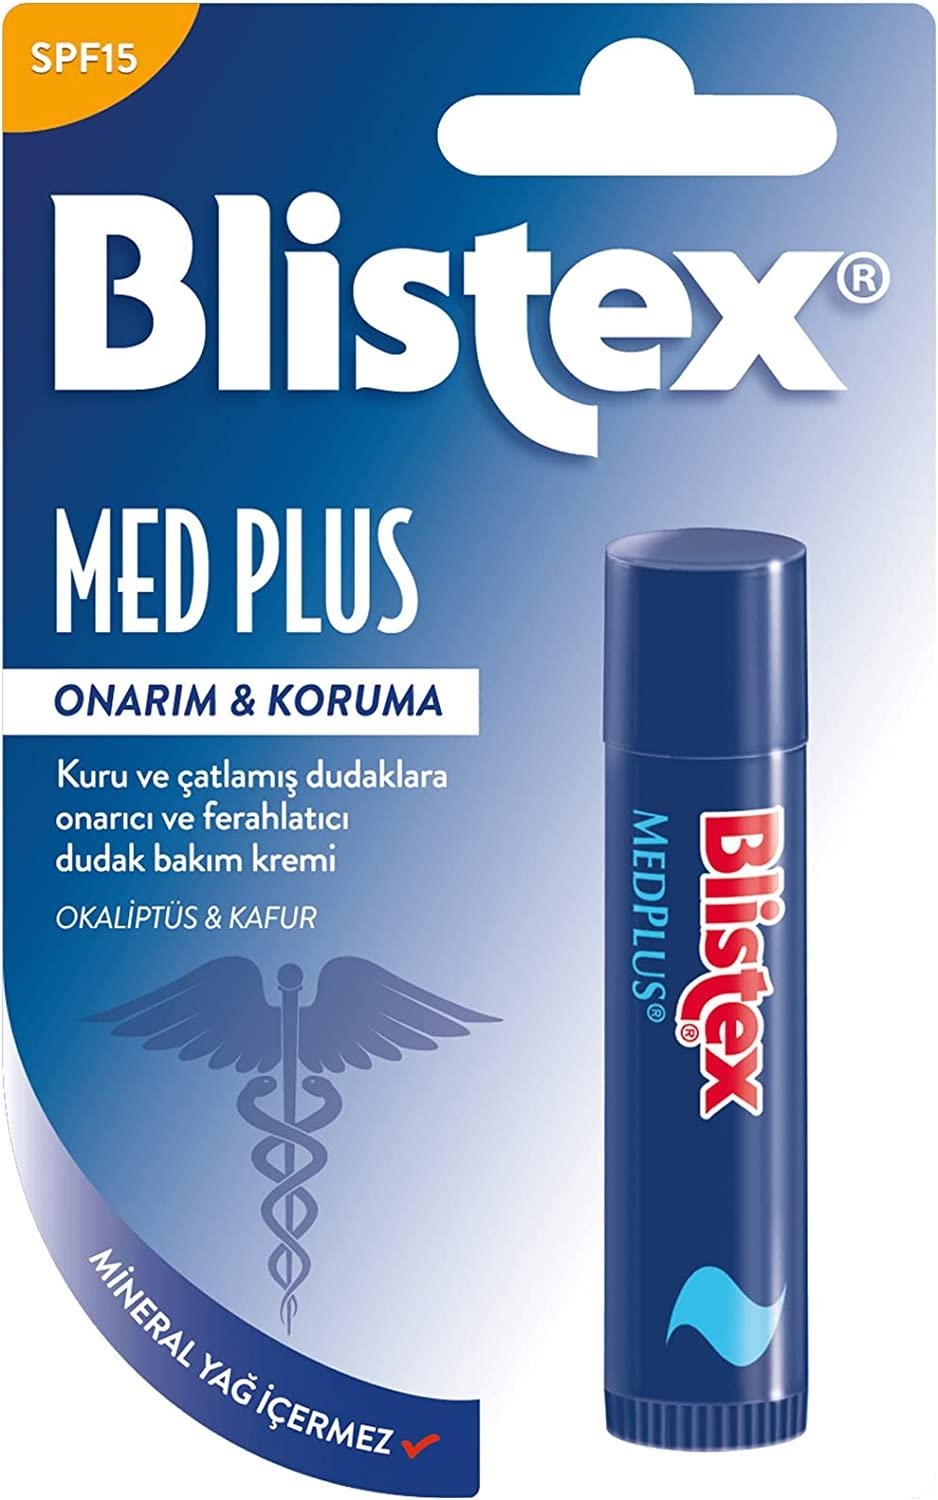 Blistex MedPlus Lips Stick Onarım & Koruma SPF 15 4.25 ml - 1